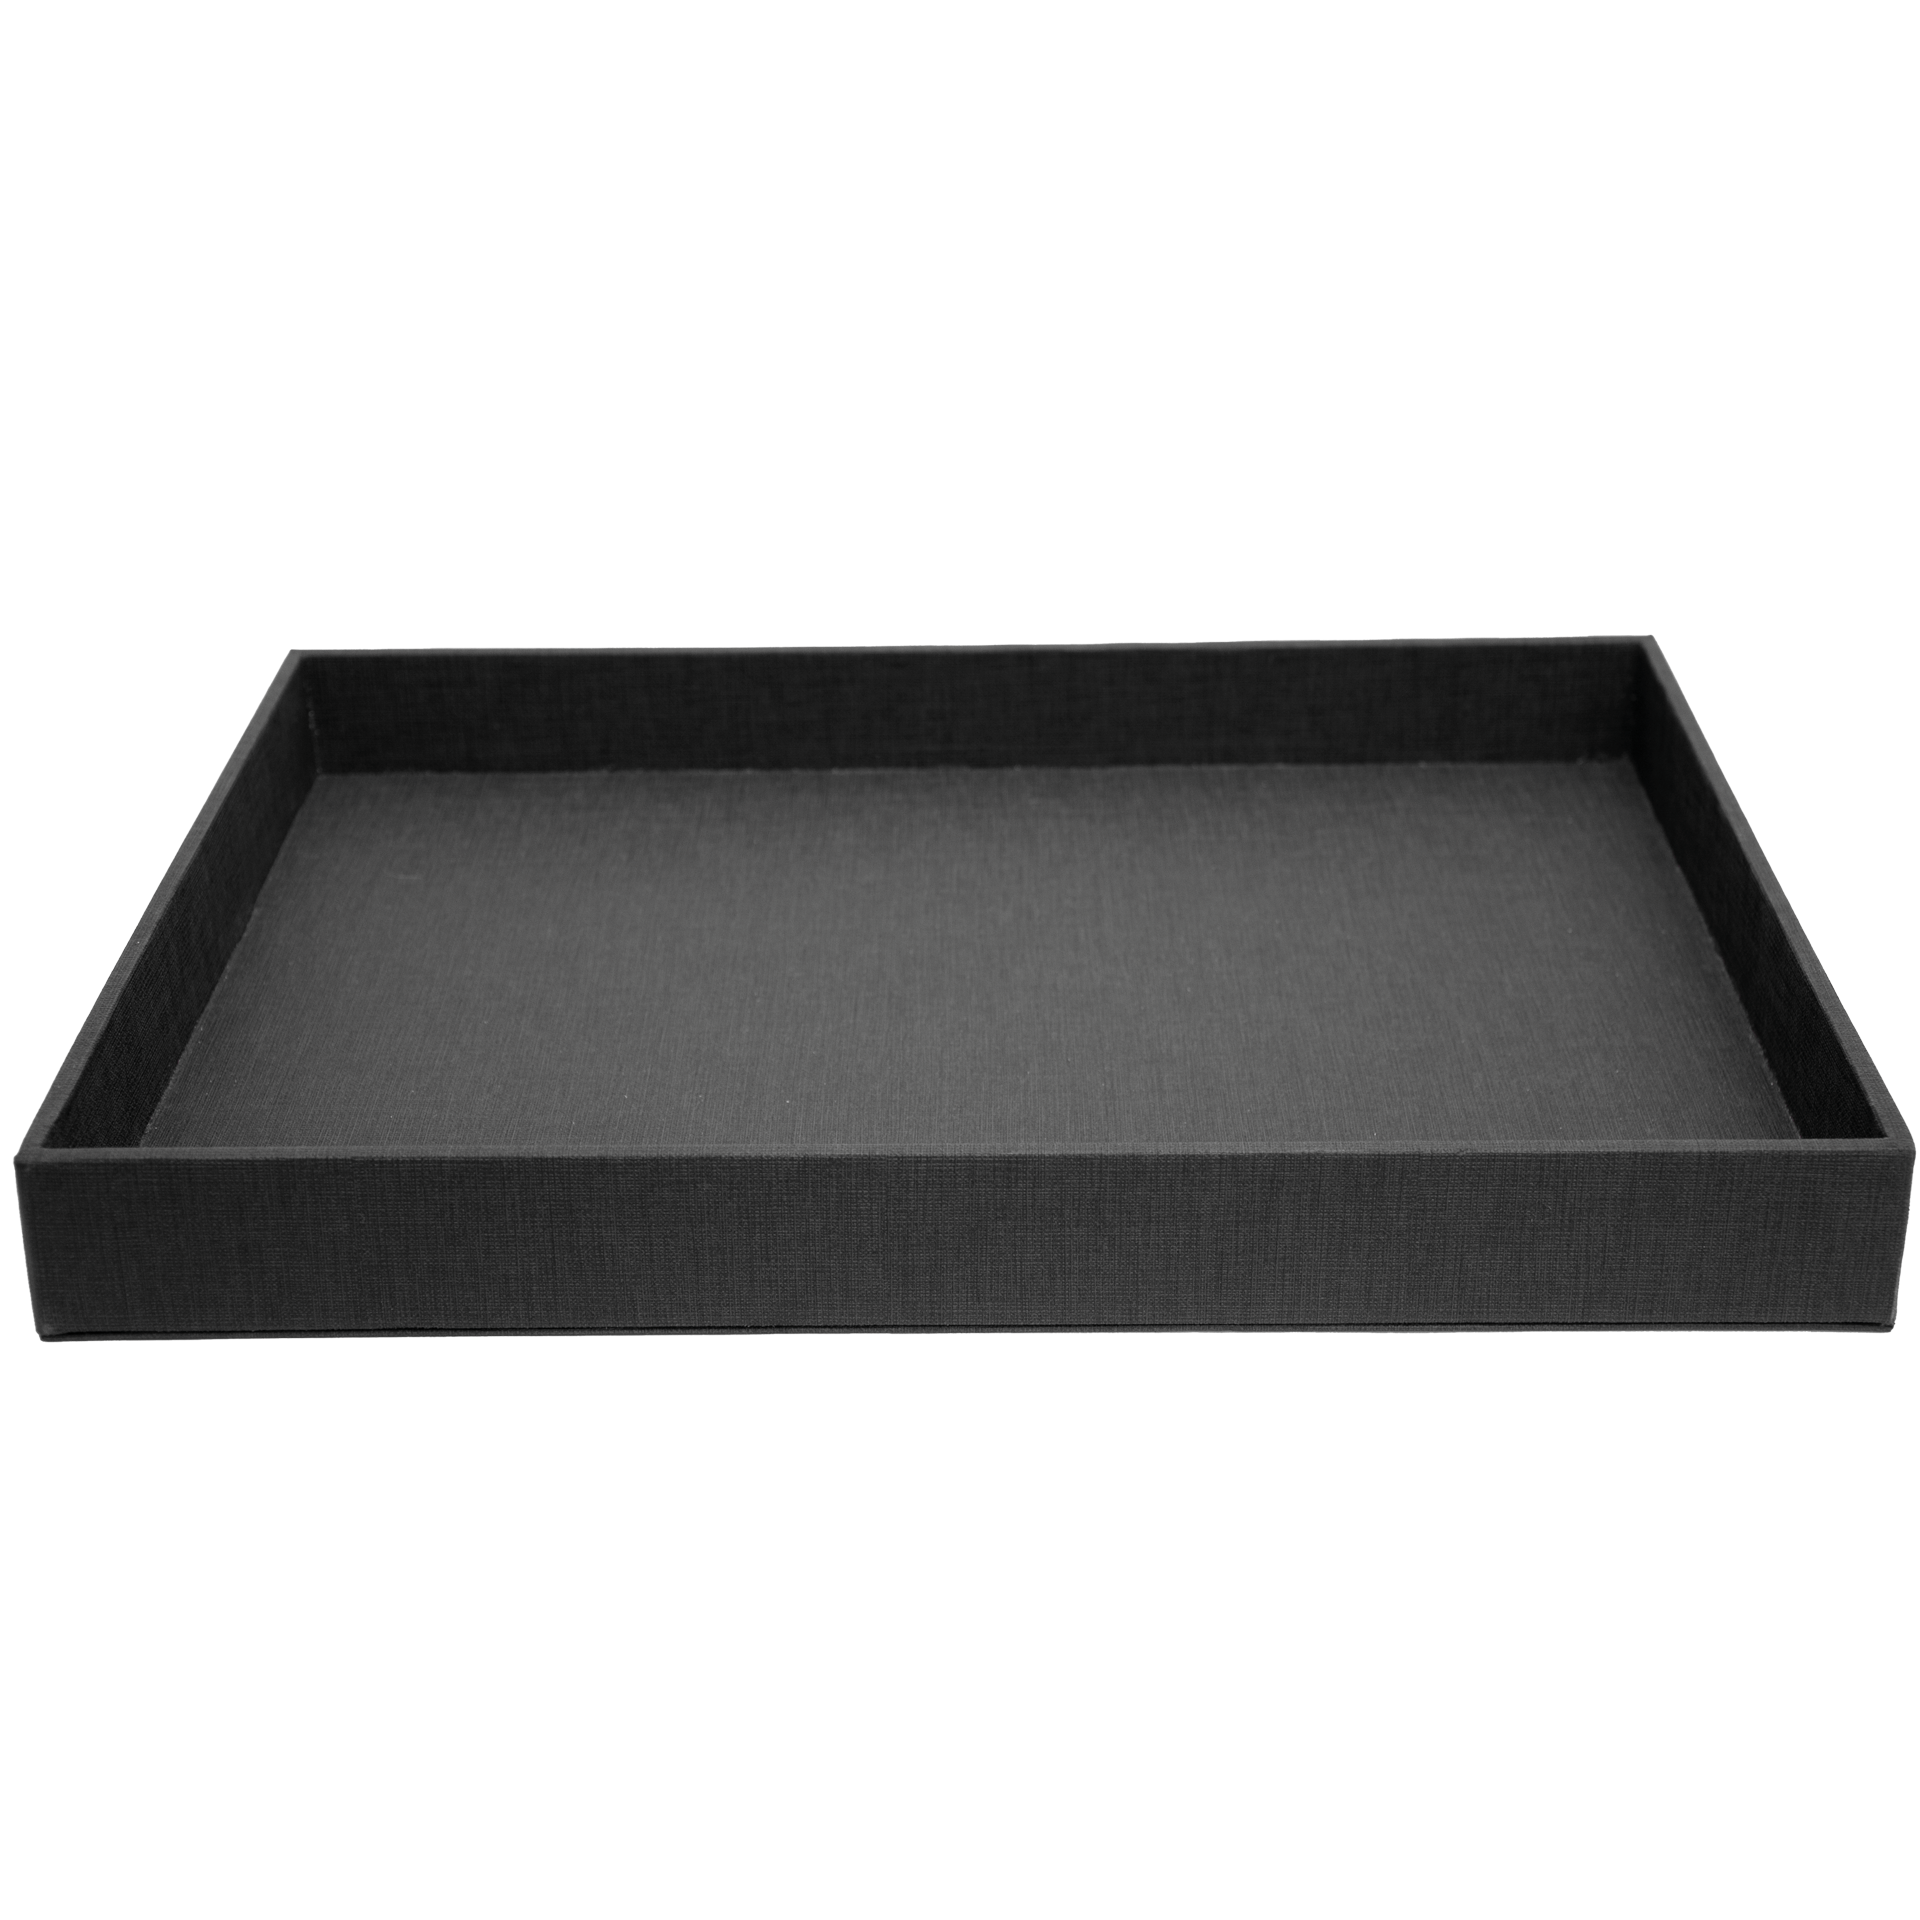 Tablett | La Carte Holz | Ecoleder 4 PASS Farben 30x40x h 4 cm